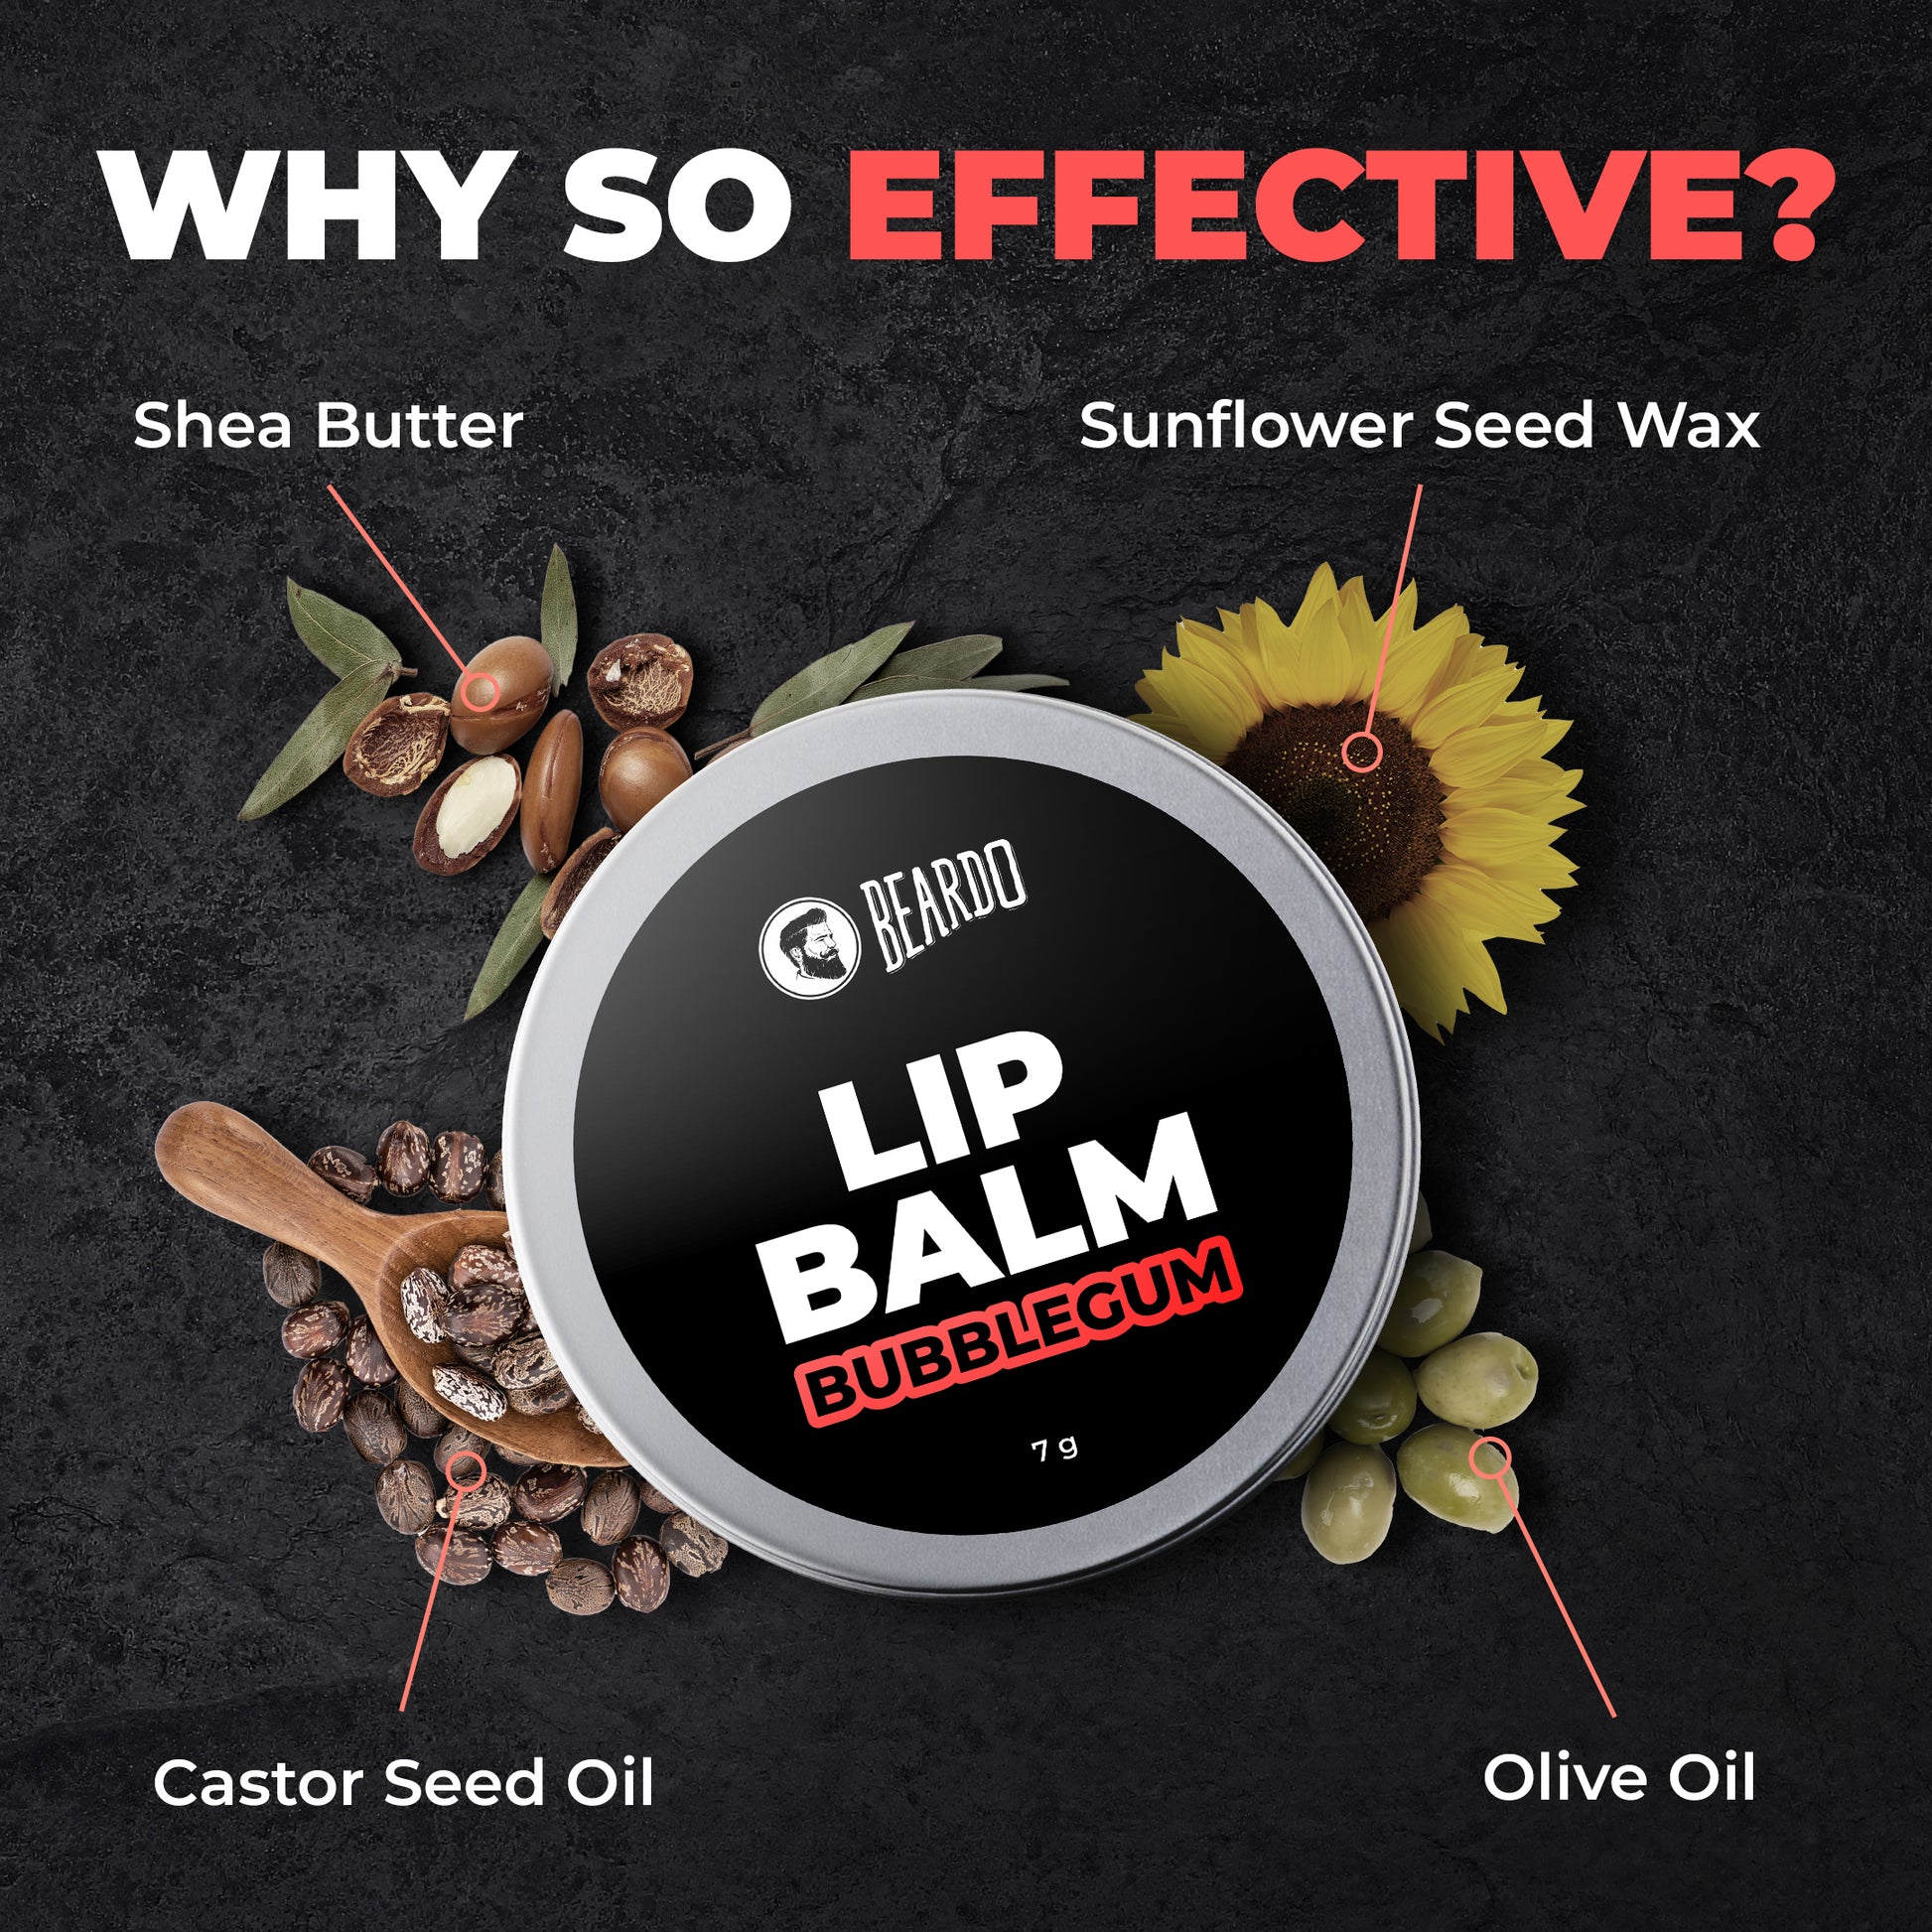 ingredients of beardo lip balm, shea butter, castor seed oil, olive oil, sunflower seed oil